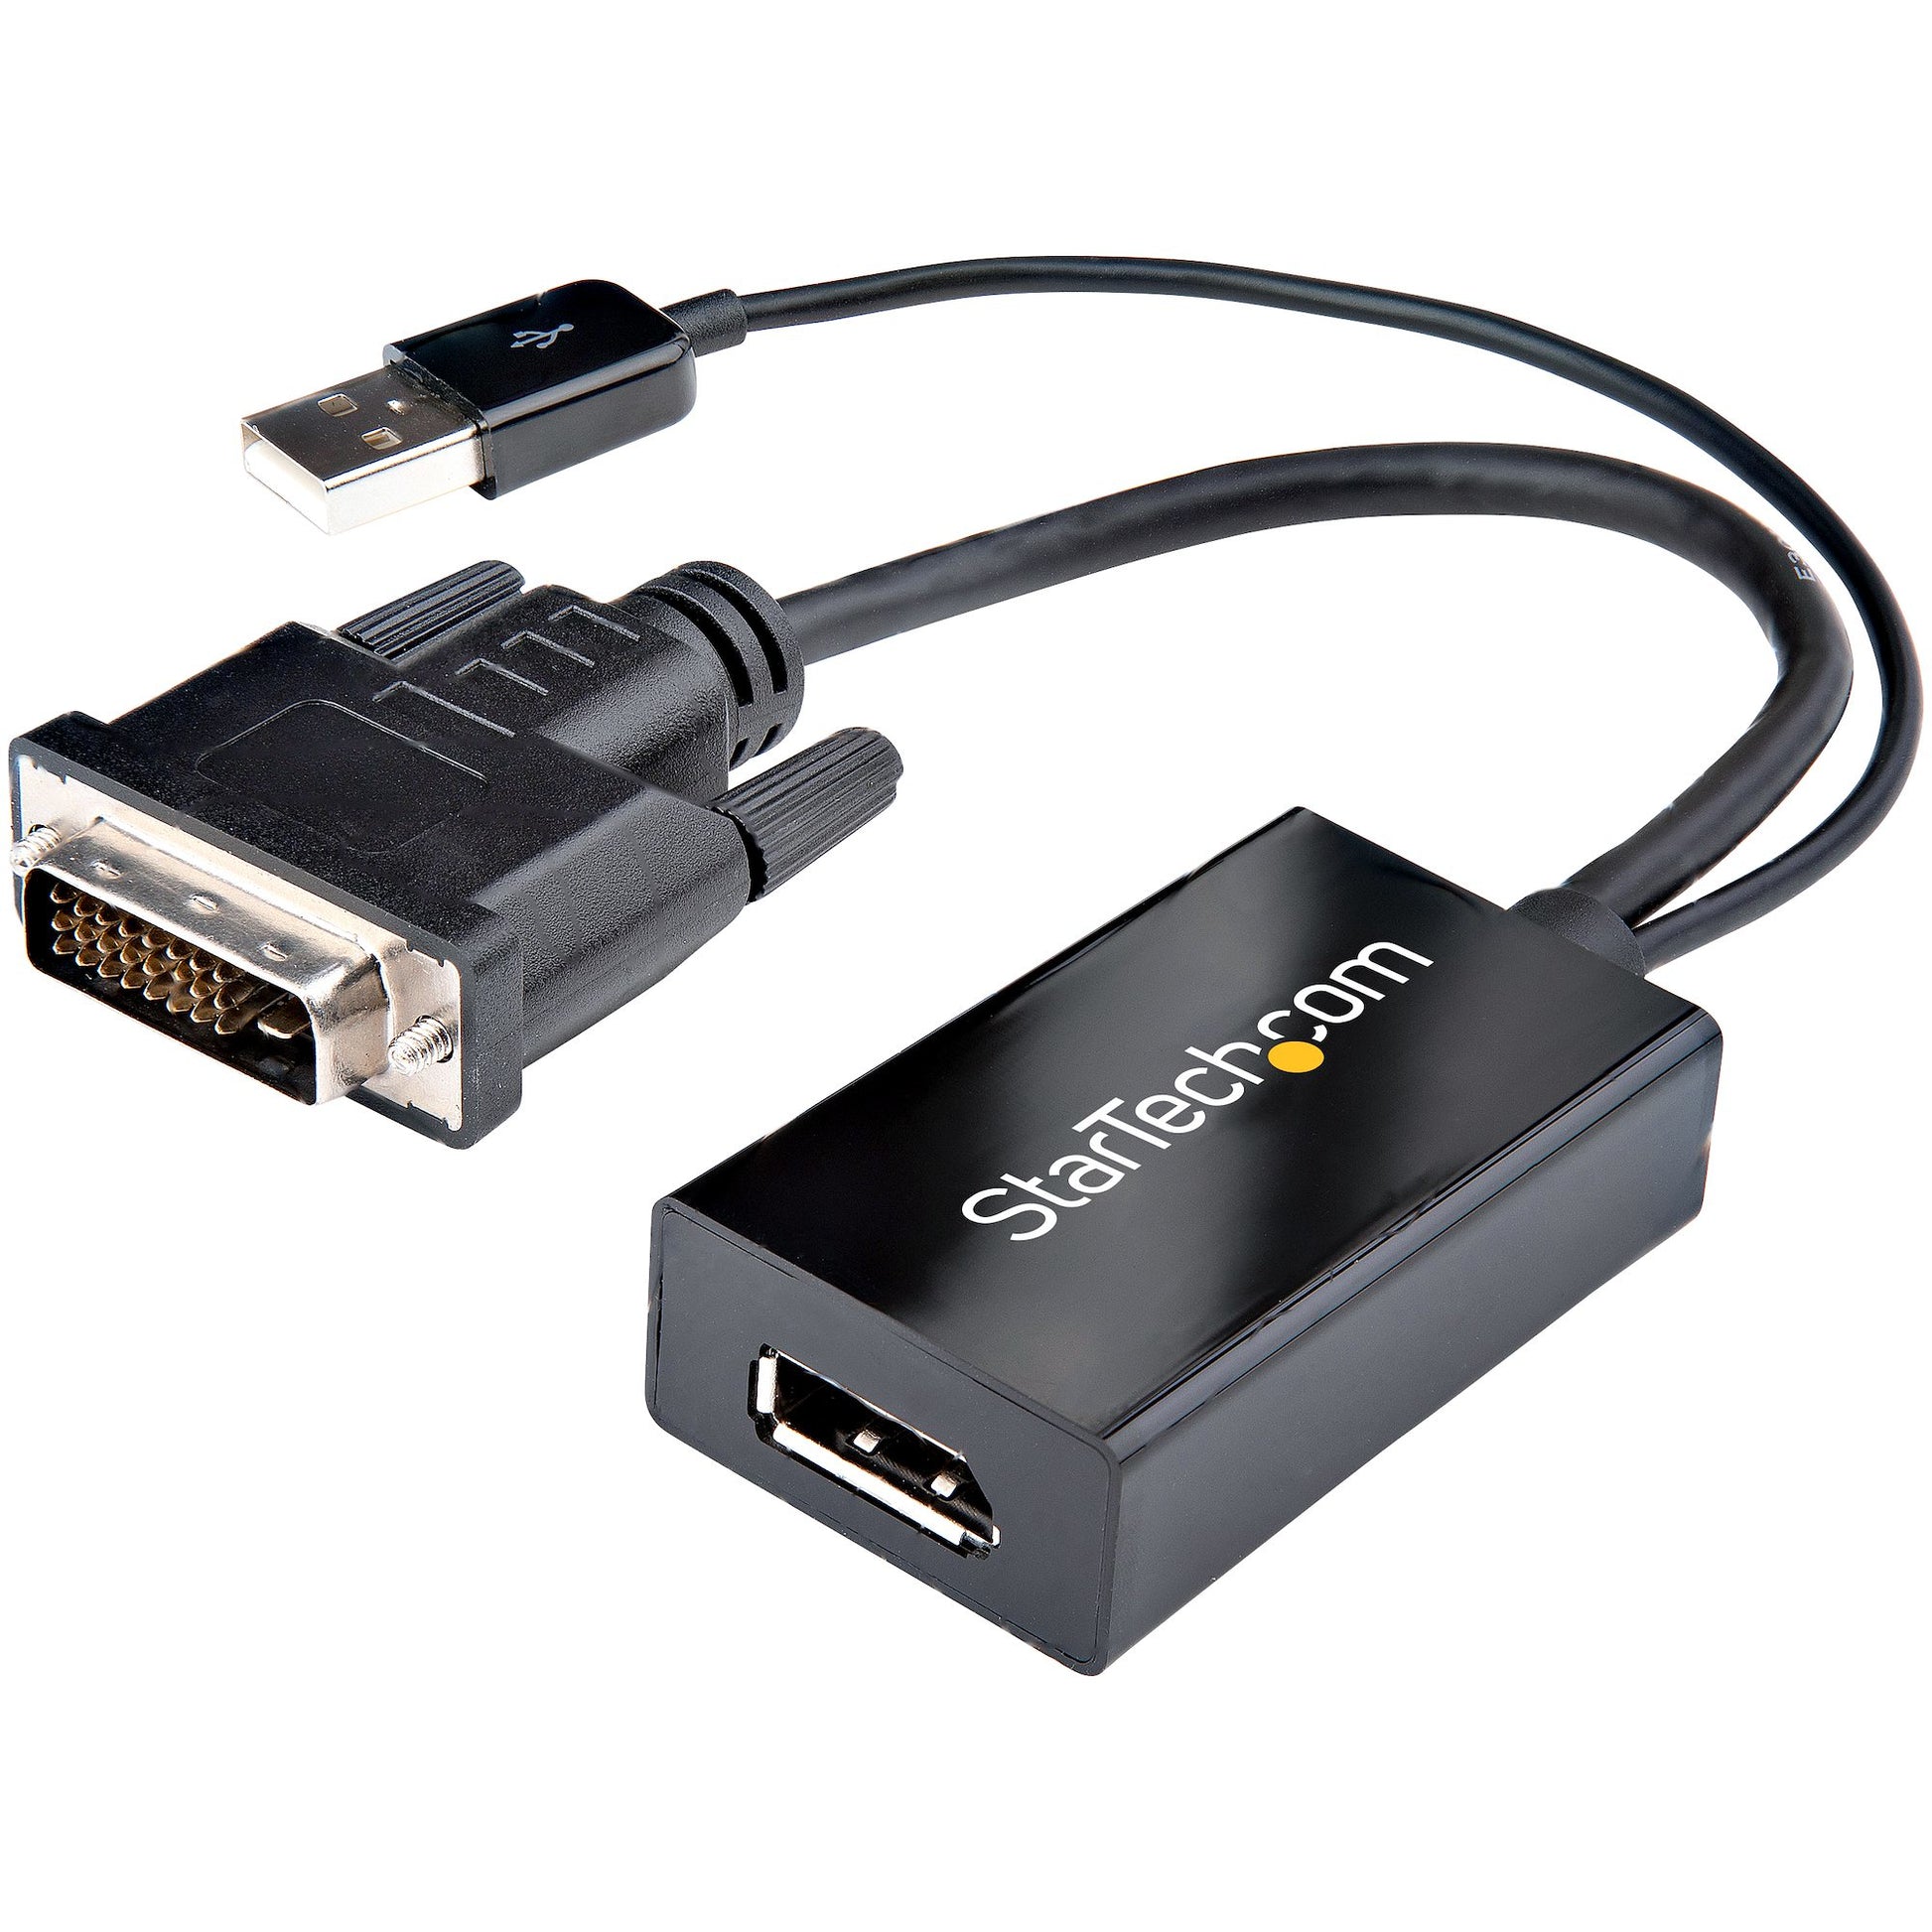 StarTech.com DVI to DisplayPort Adapter - USB Power - 1920 x 1200 - DVI to DisplayPort Converter - Video Adapter - DVI-D to DP-0